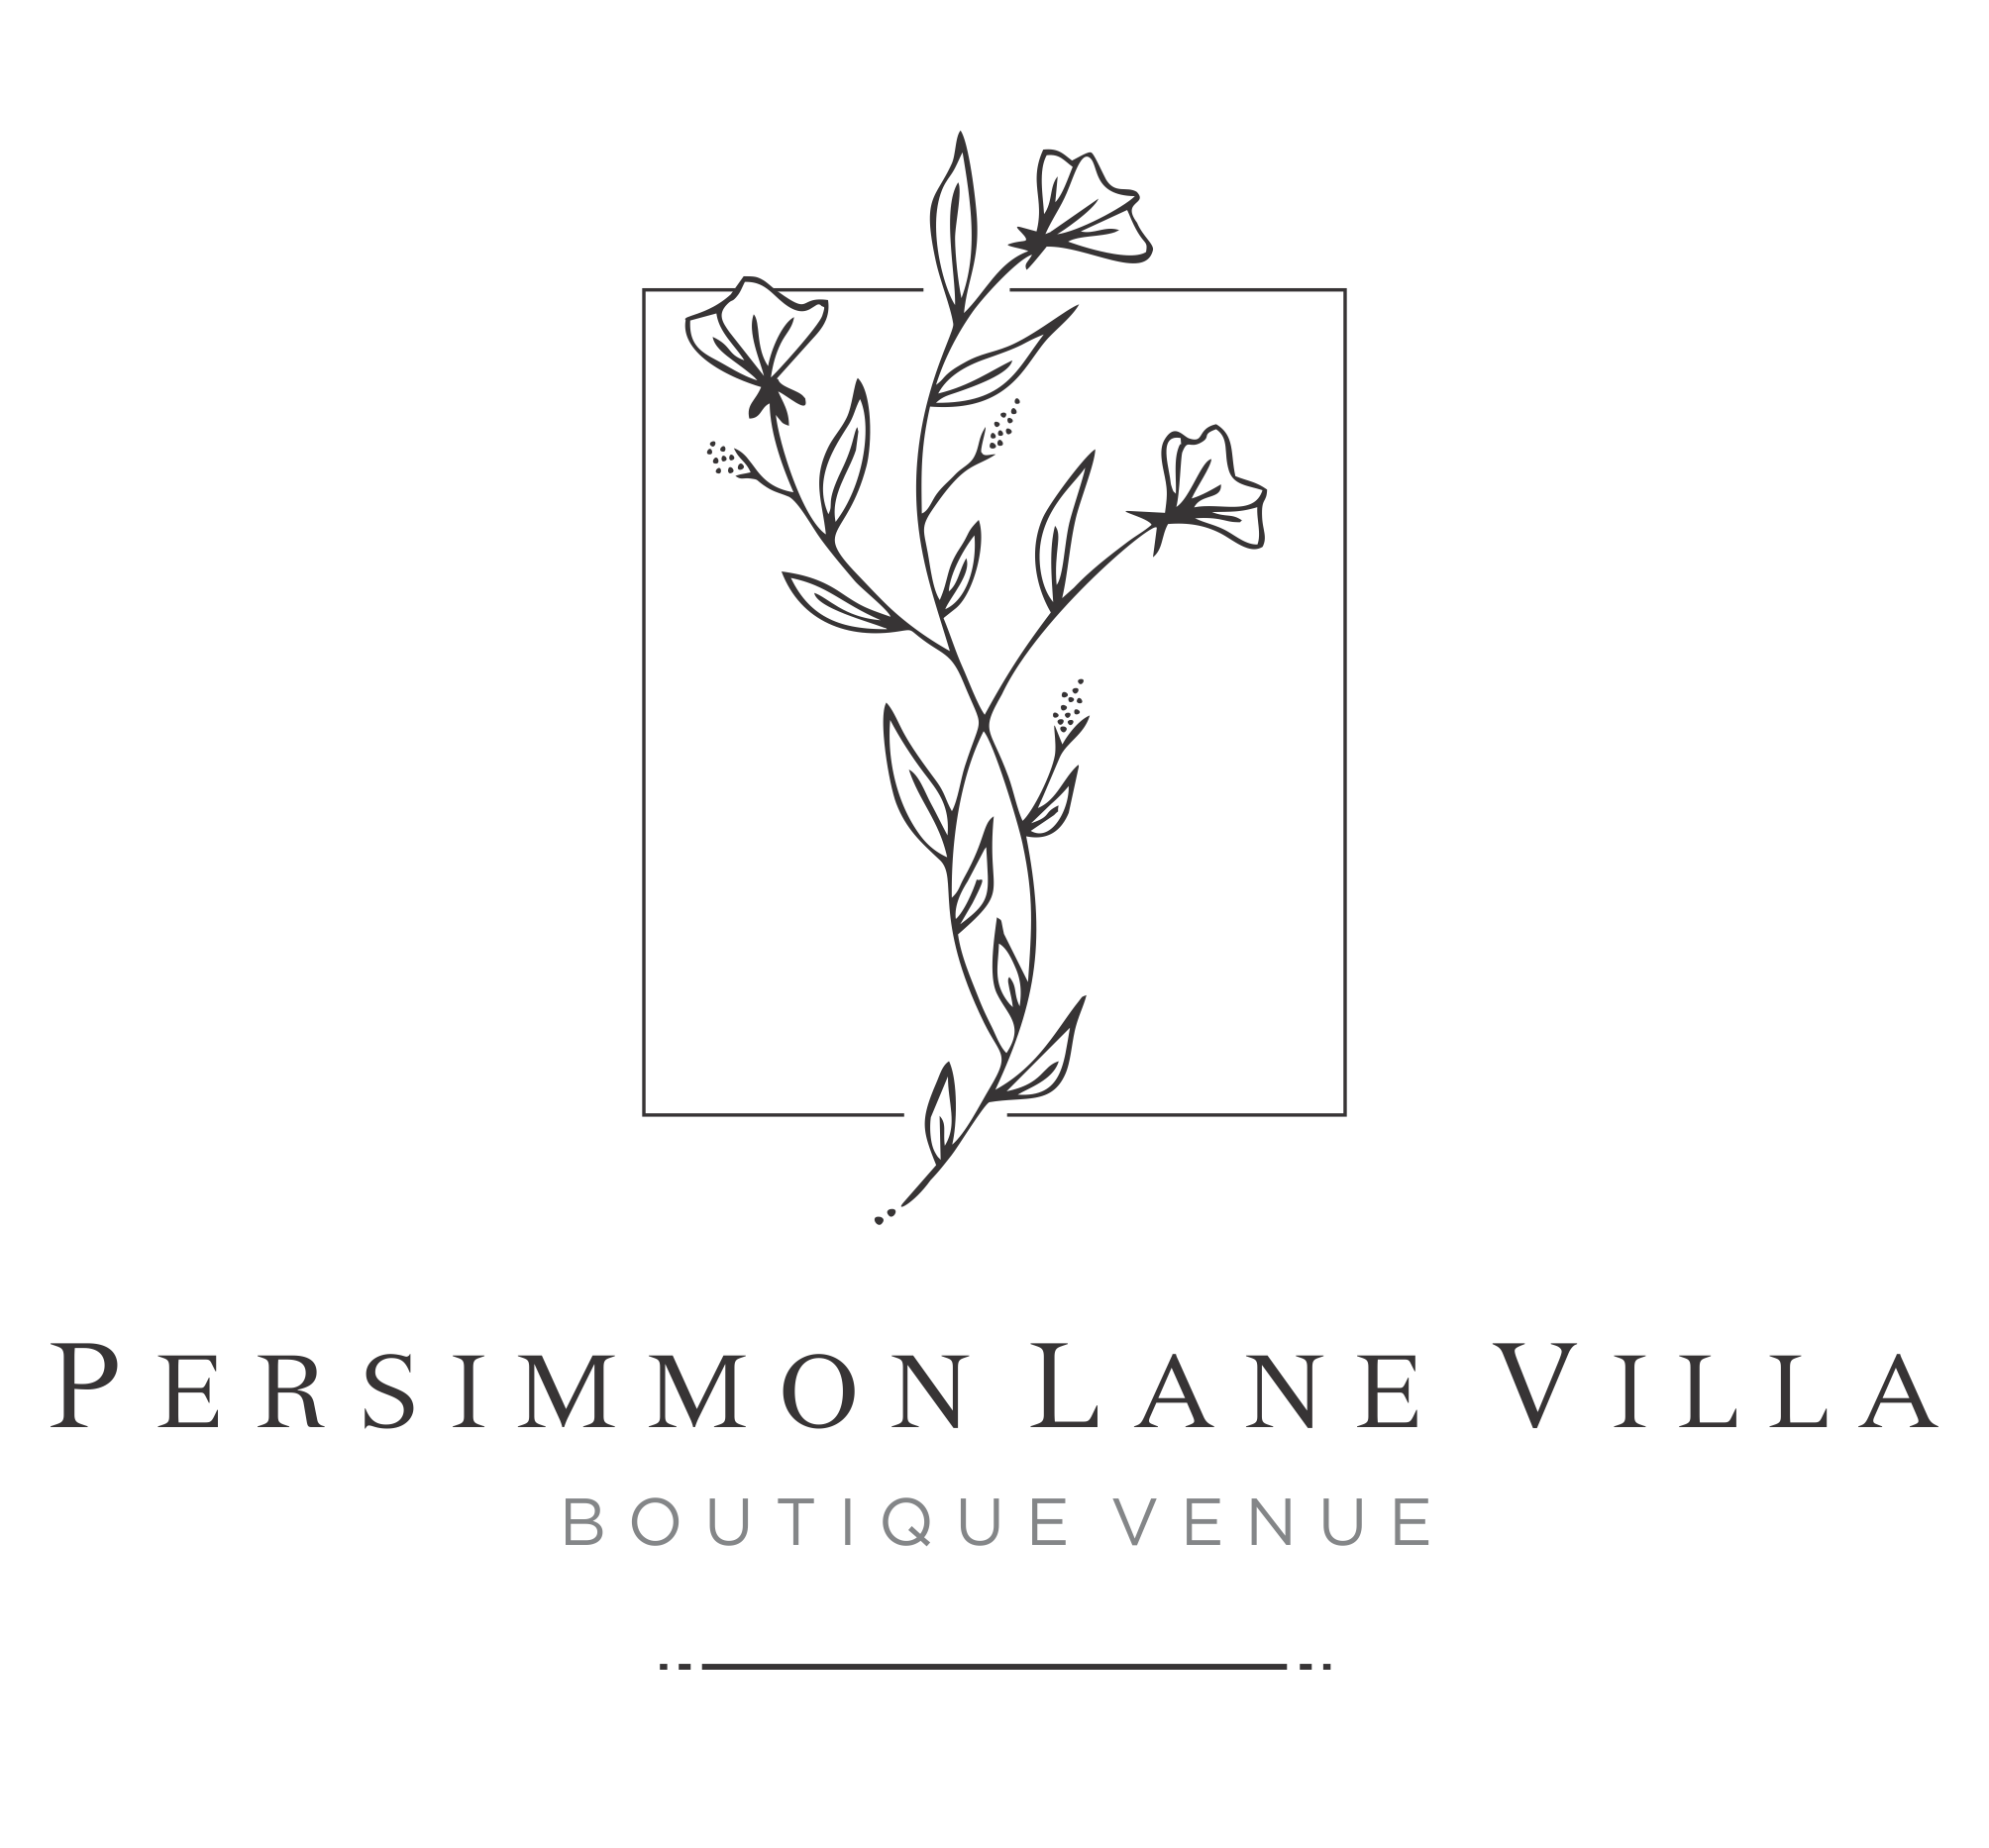 Persimmon Lane Venue